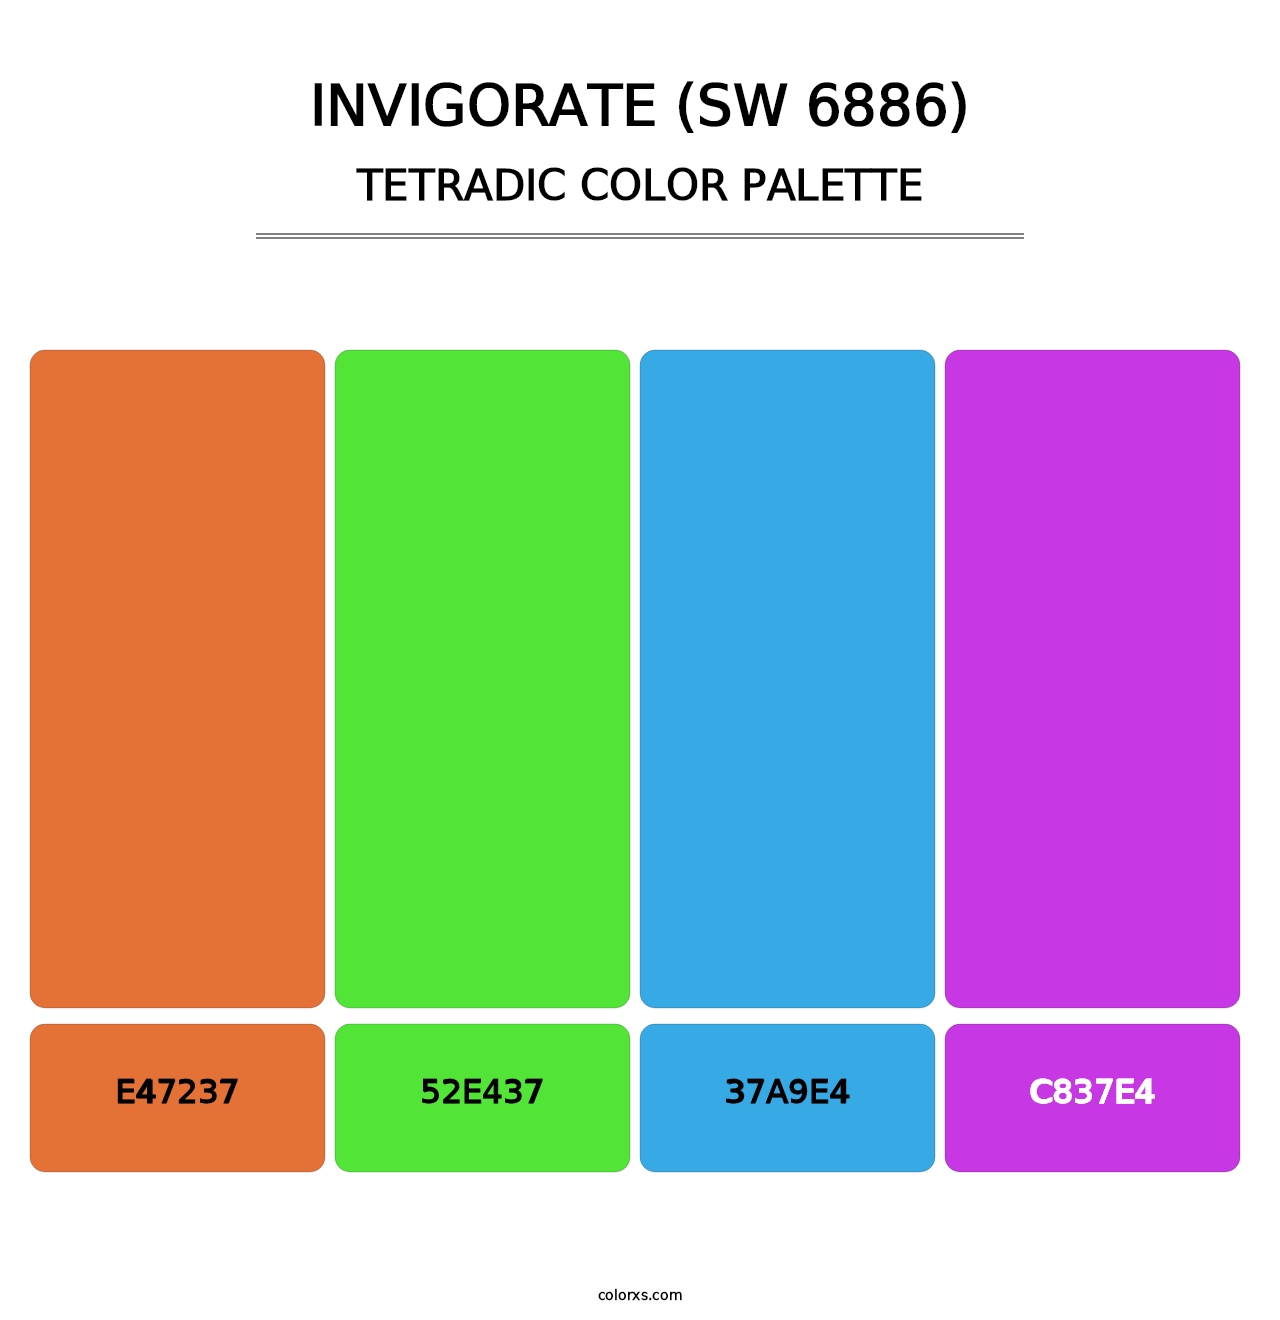 Invigorate (SW 6886) - Tetradic Color Palette